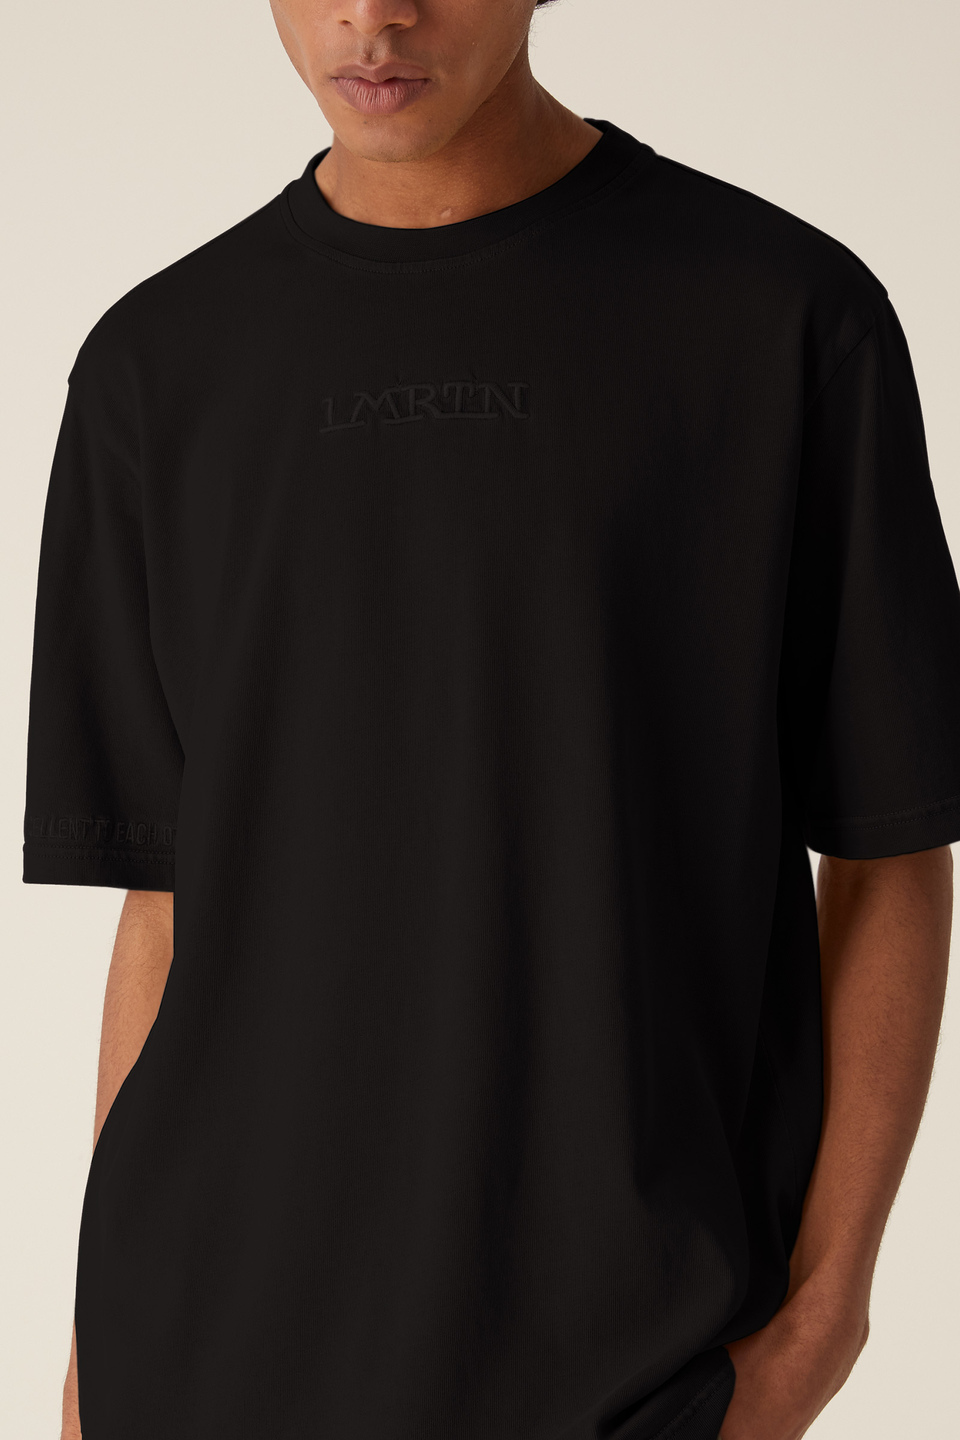 LMRTN basic T-shirt | La Martina - Official Online Shop